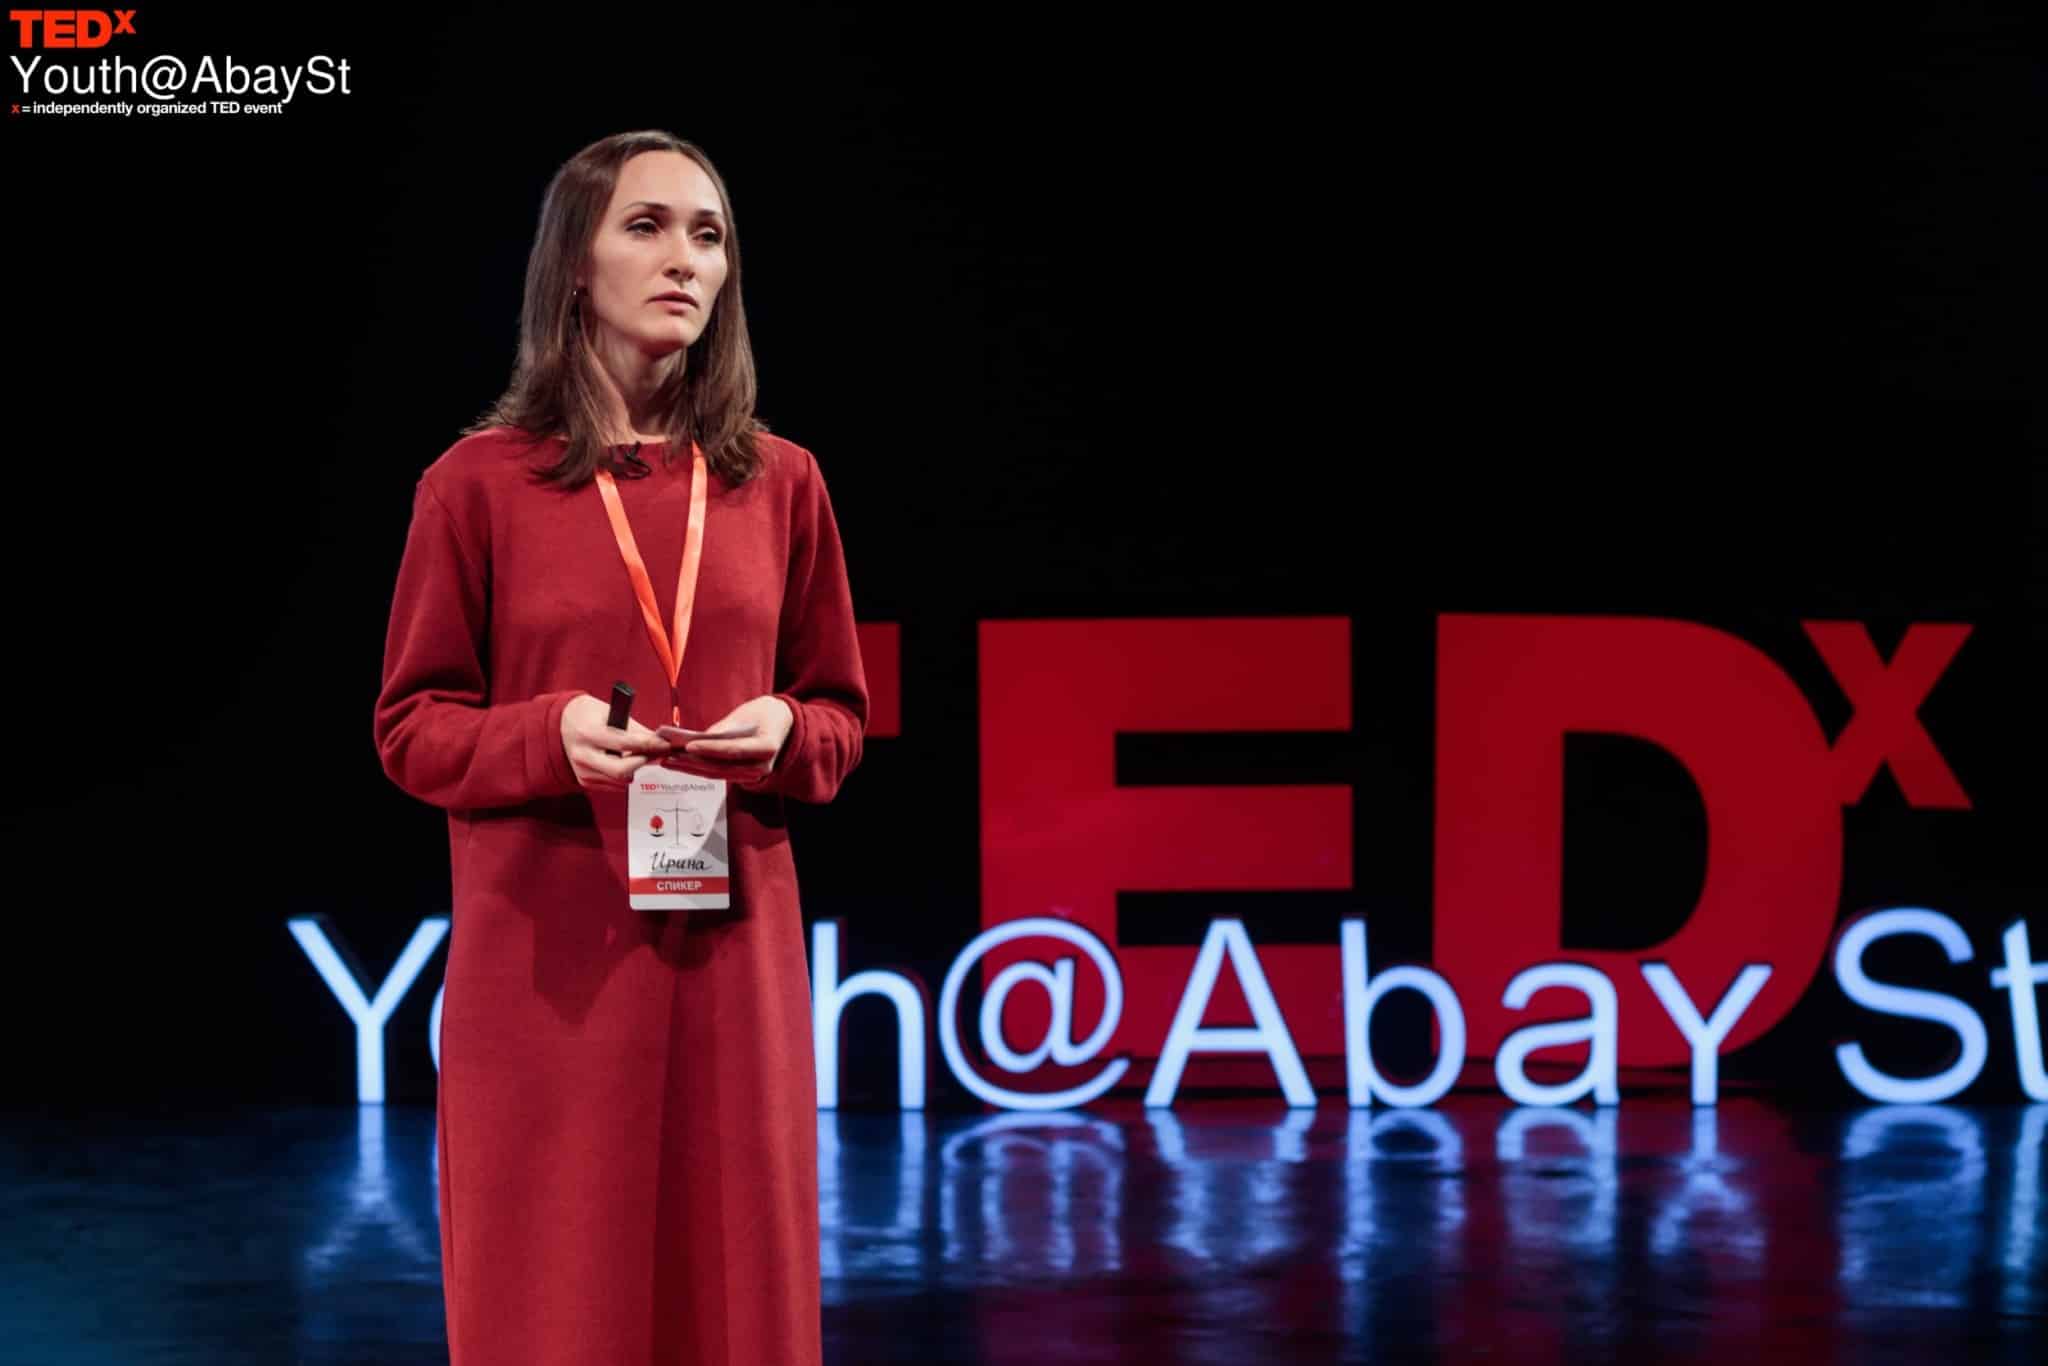 TEDxYouth AbaySt